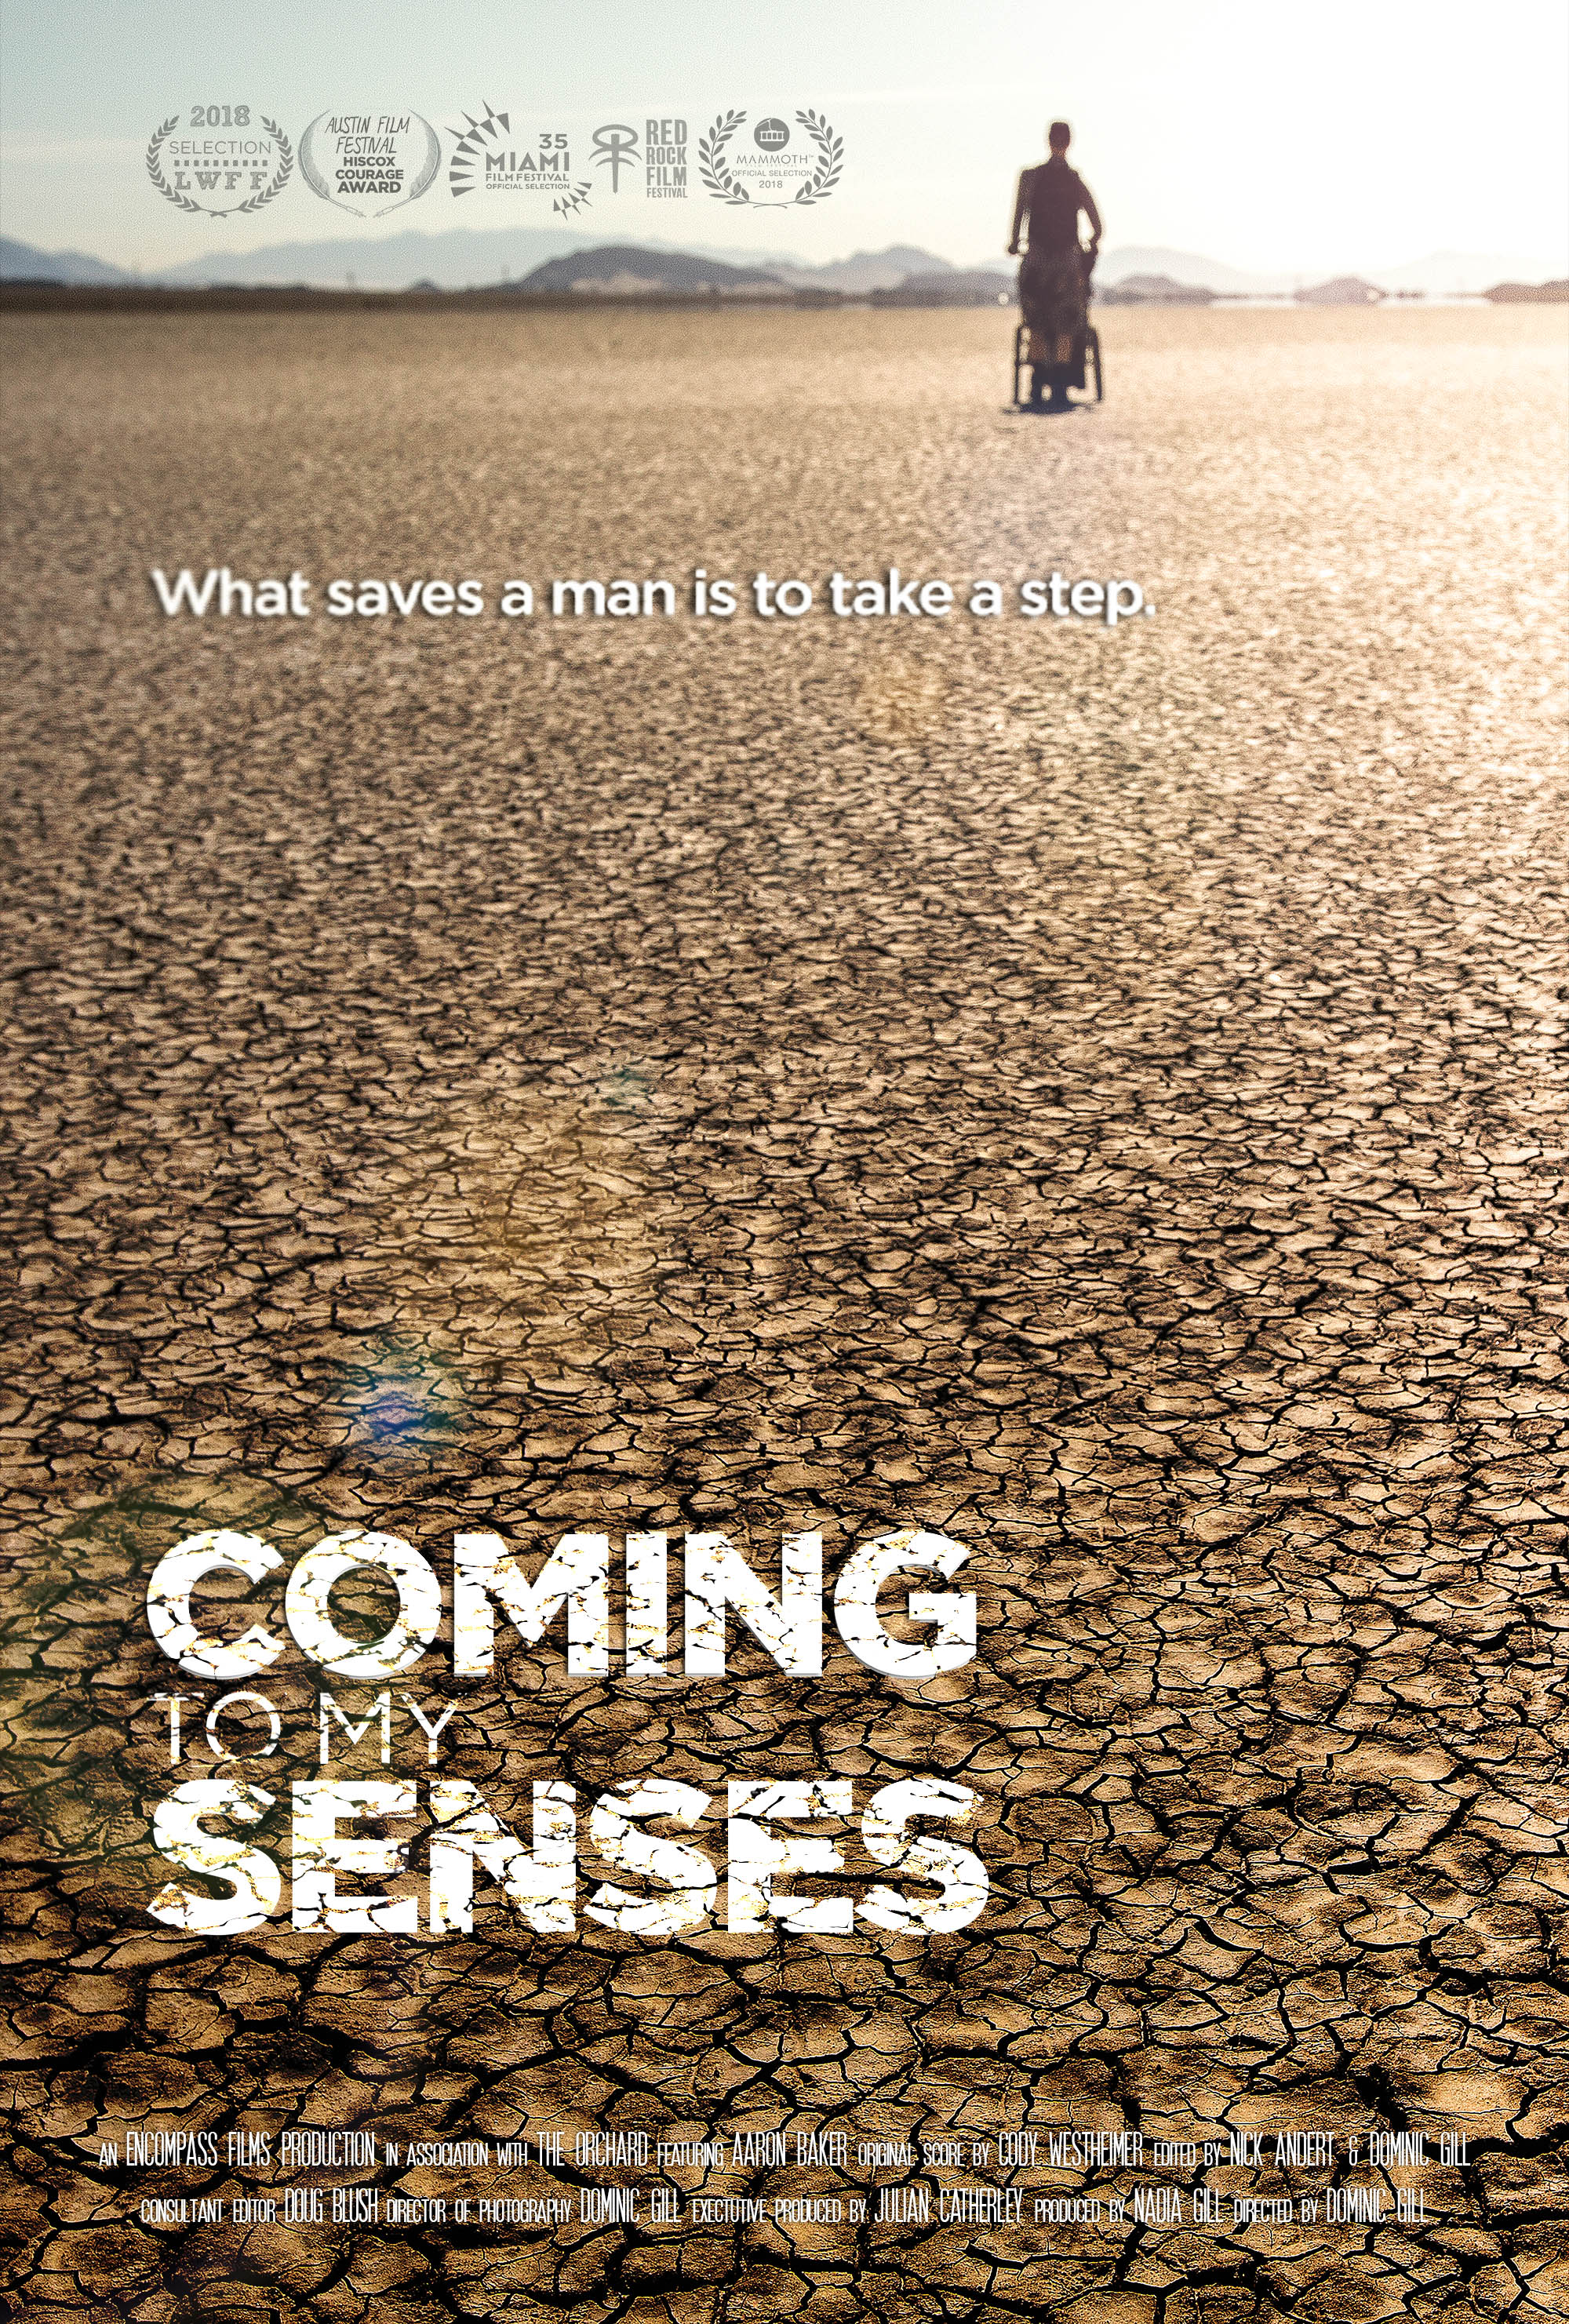 Nonton film Coming to My Senses layarkaca21 indoxx1 ganool online streaming terbaru